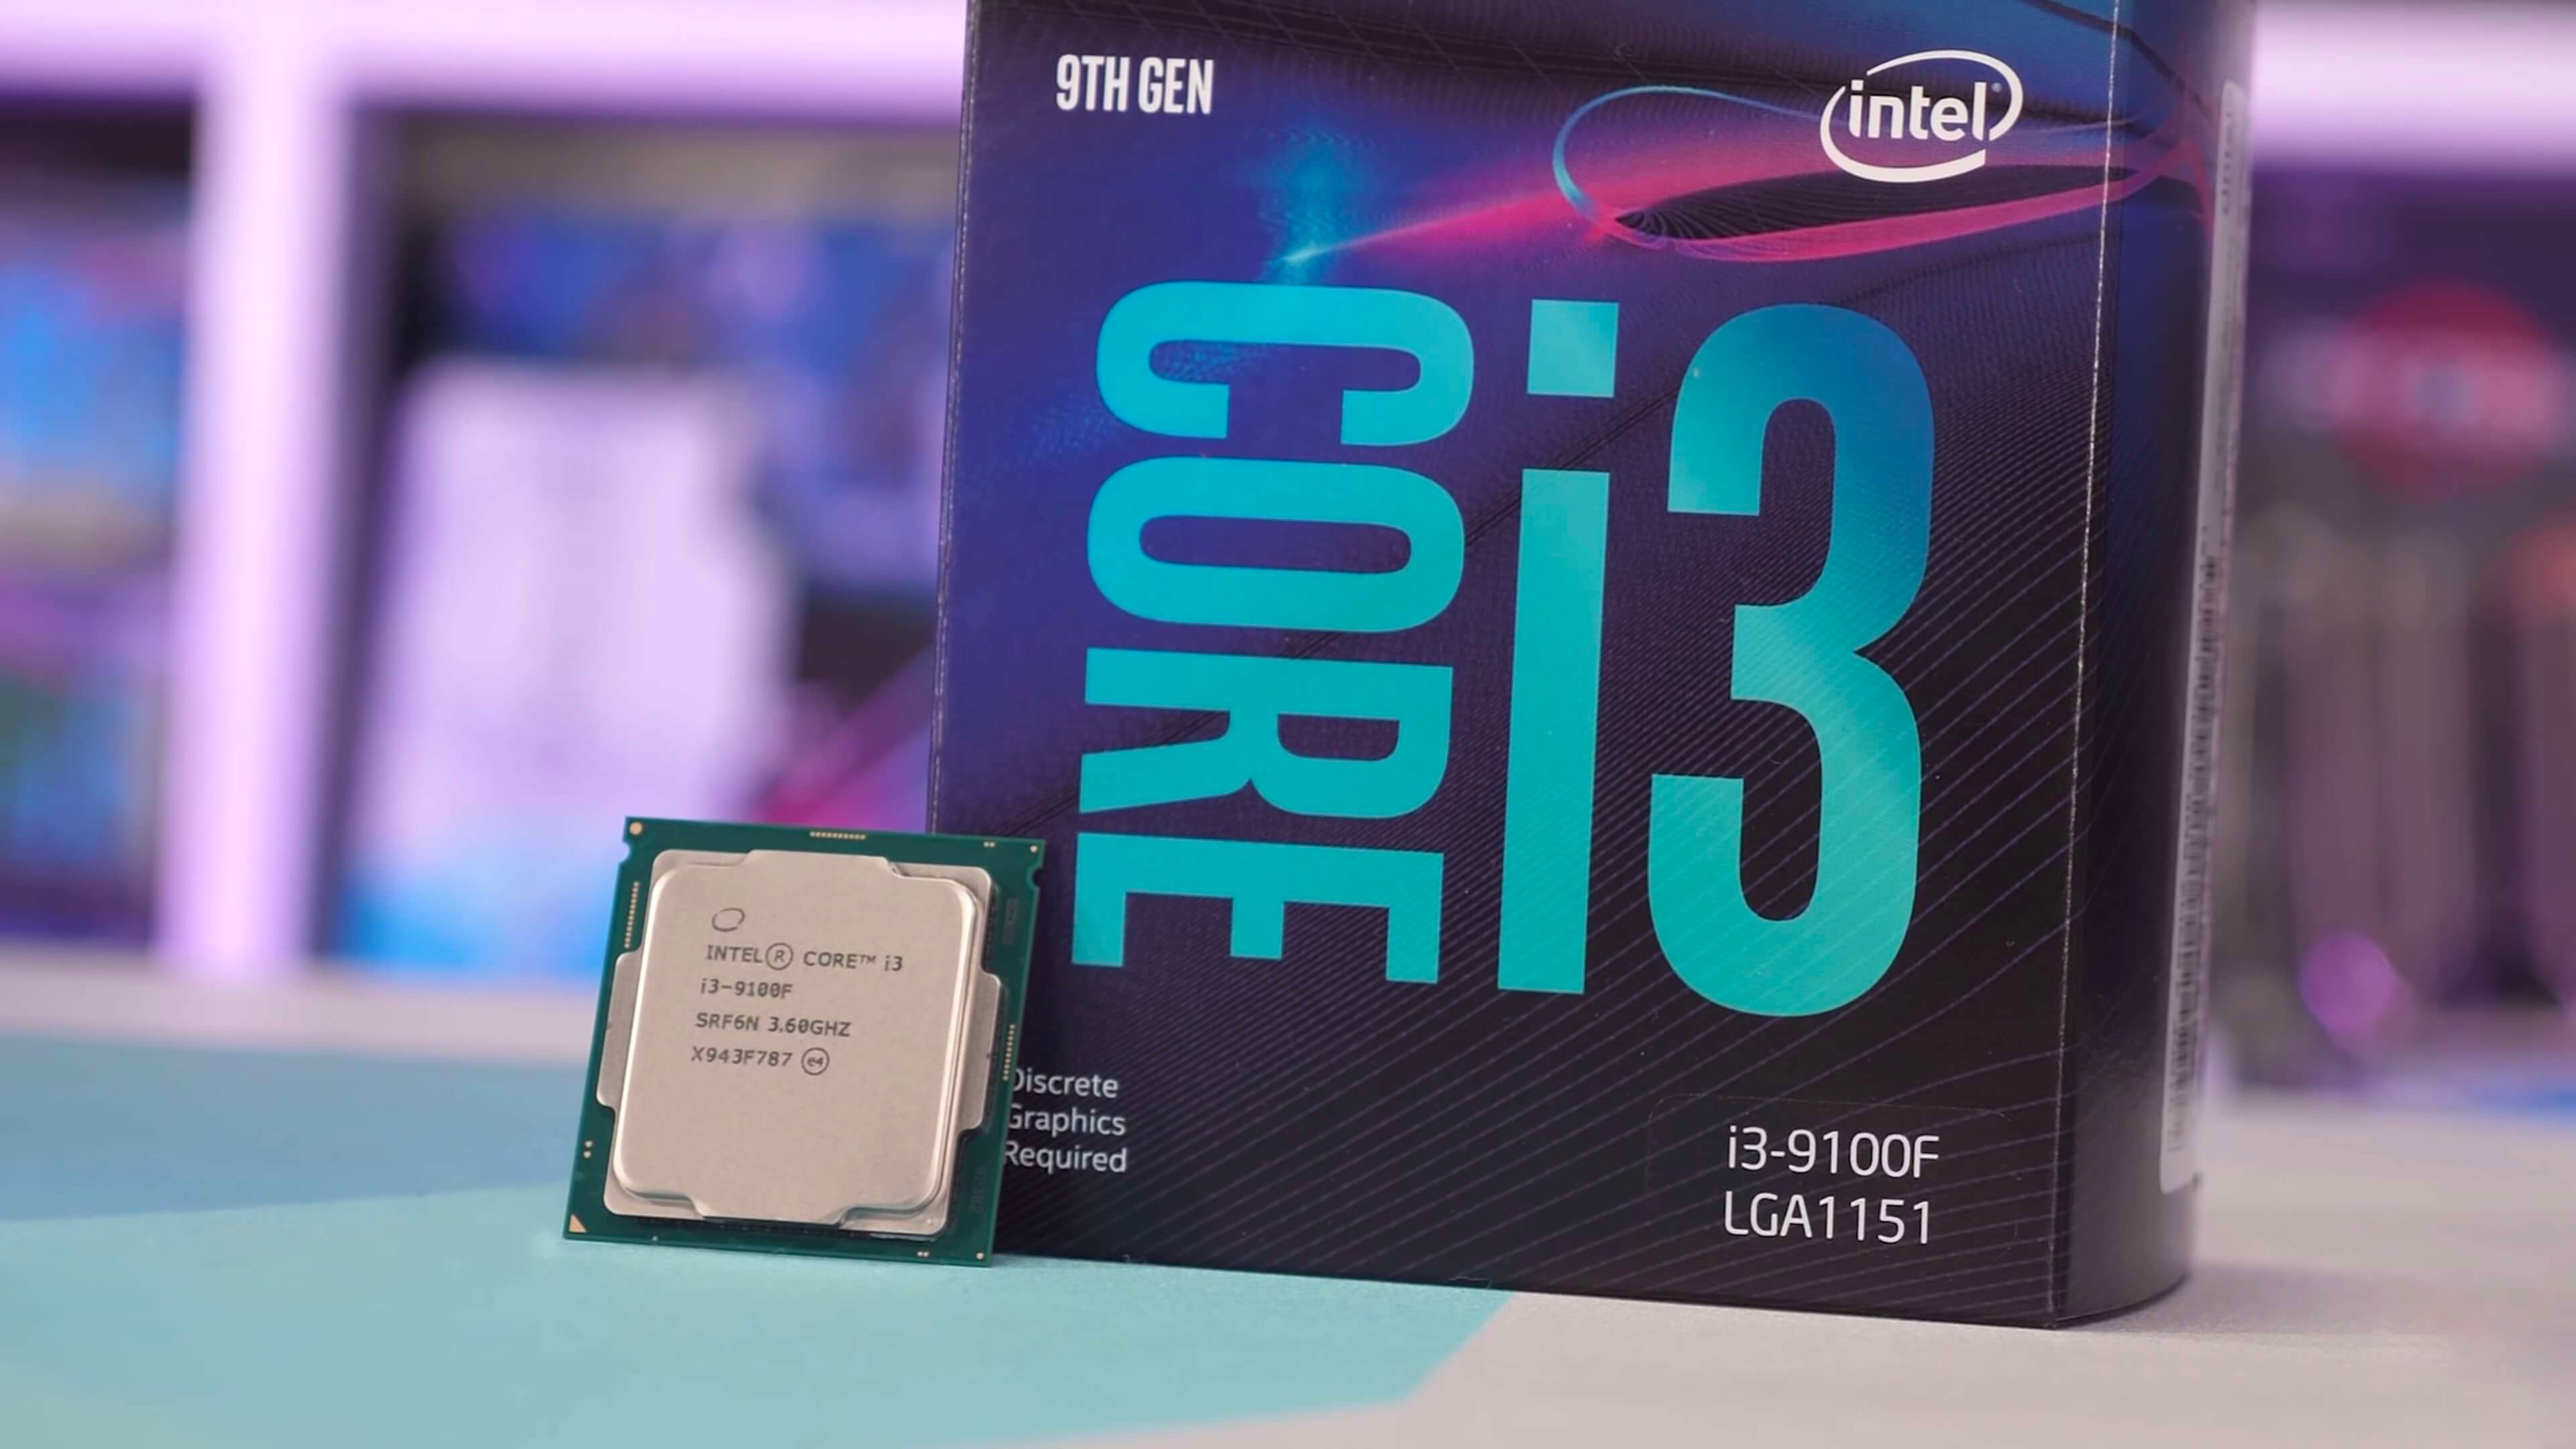 Intel Core i3-9100F vs. Ryzen 5 1600 AF Photo Gallery - TechSpot